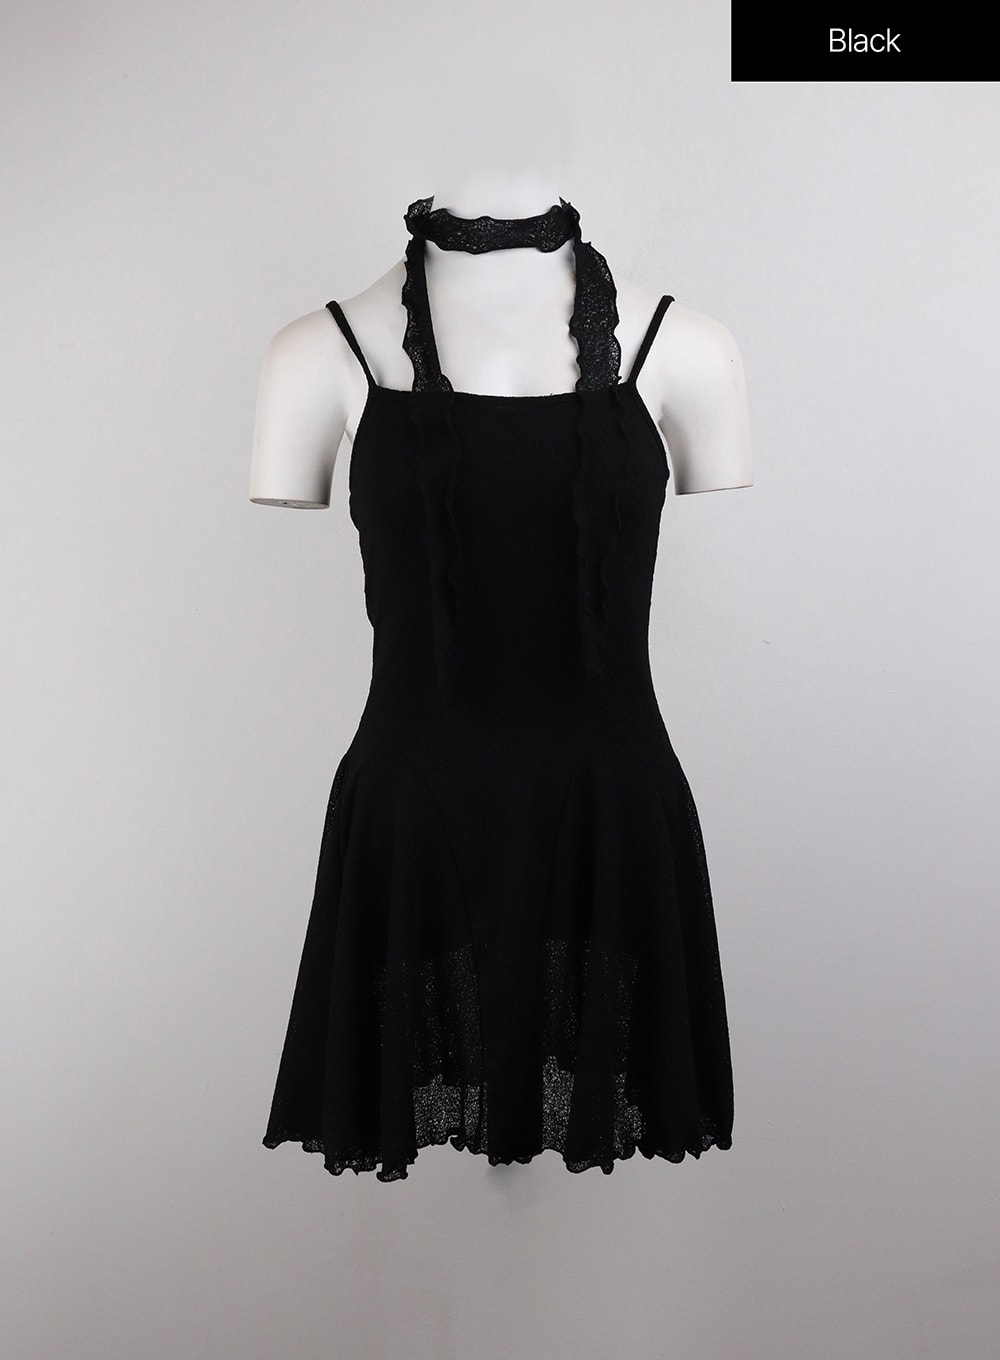 sheer-sleeveless-mini-dress-cj410